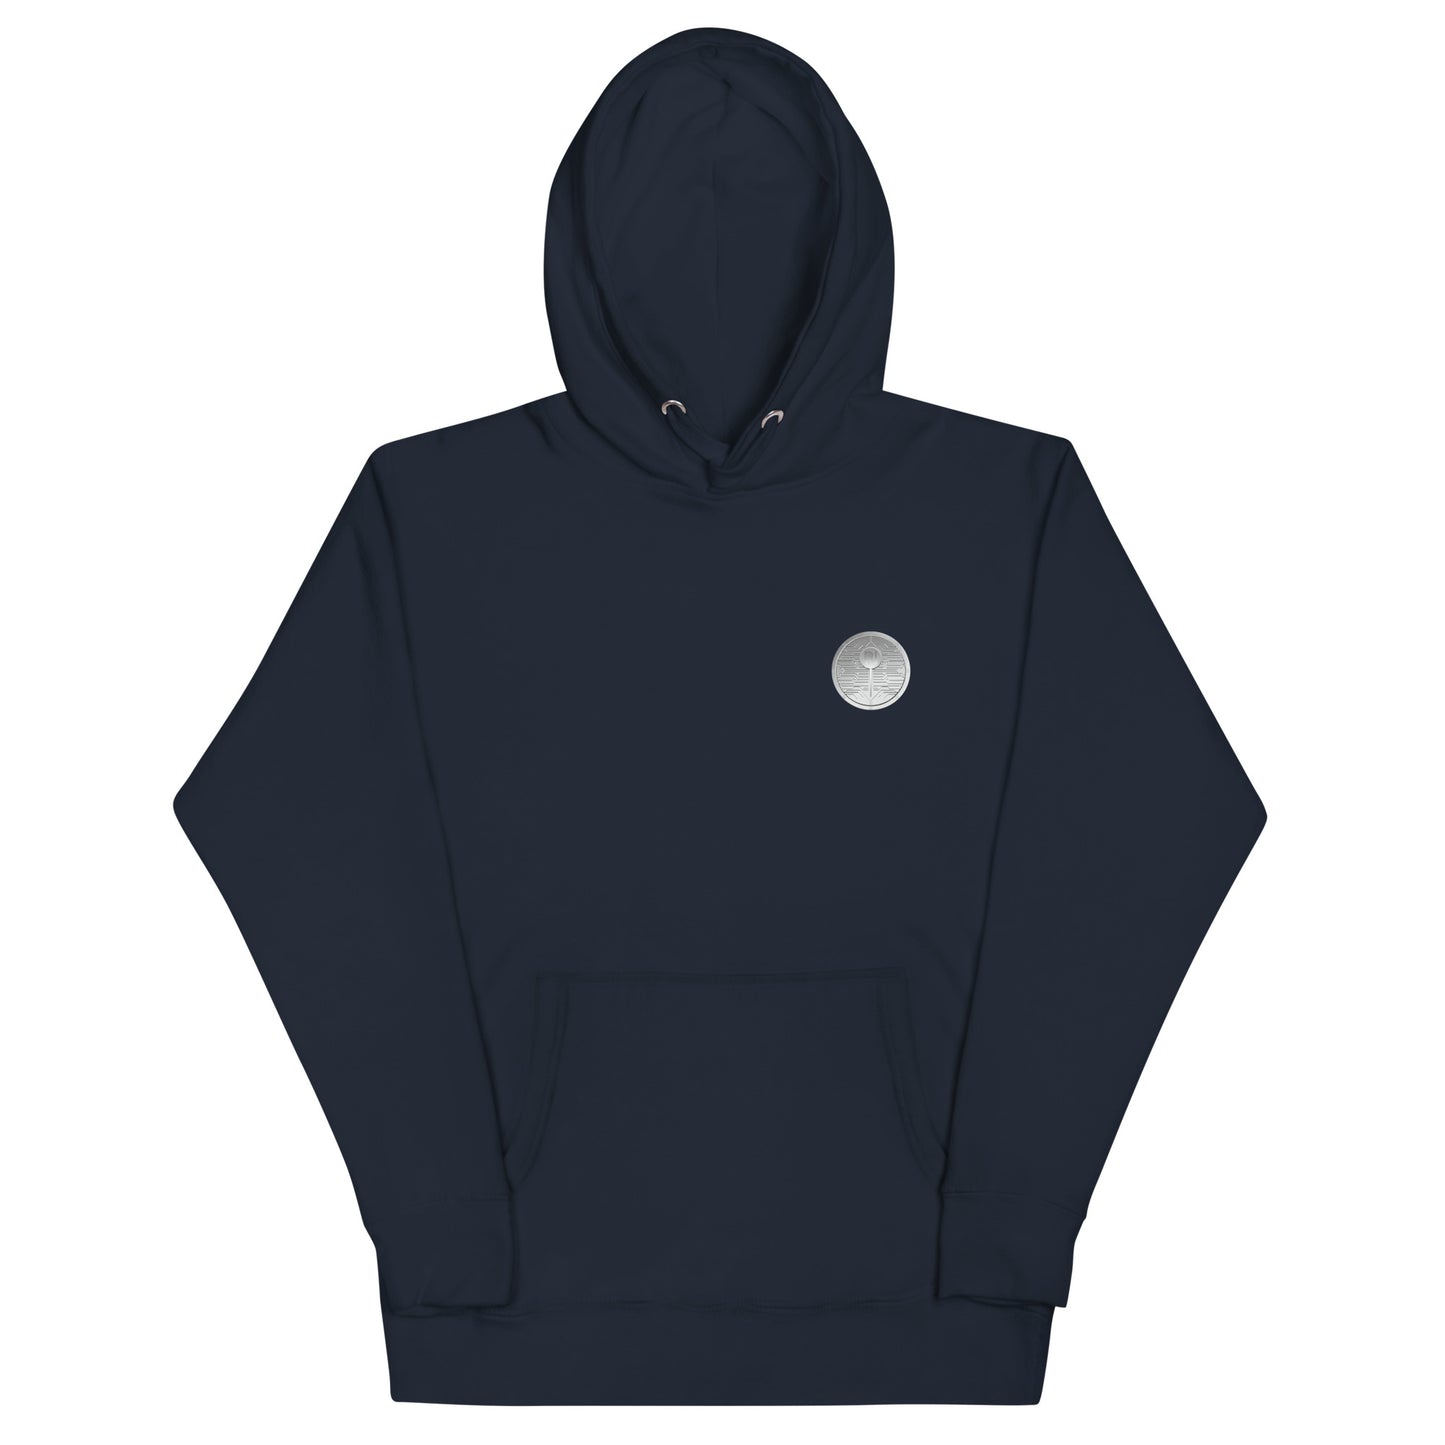 Unisex PIN token hoodie